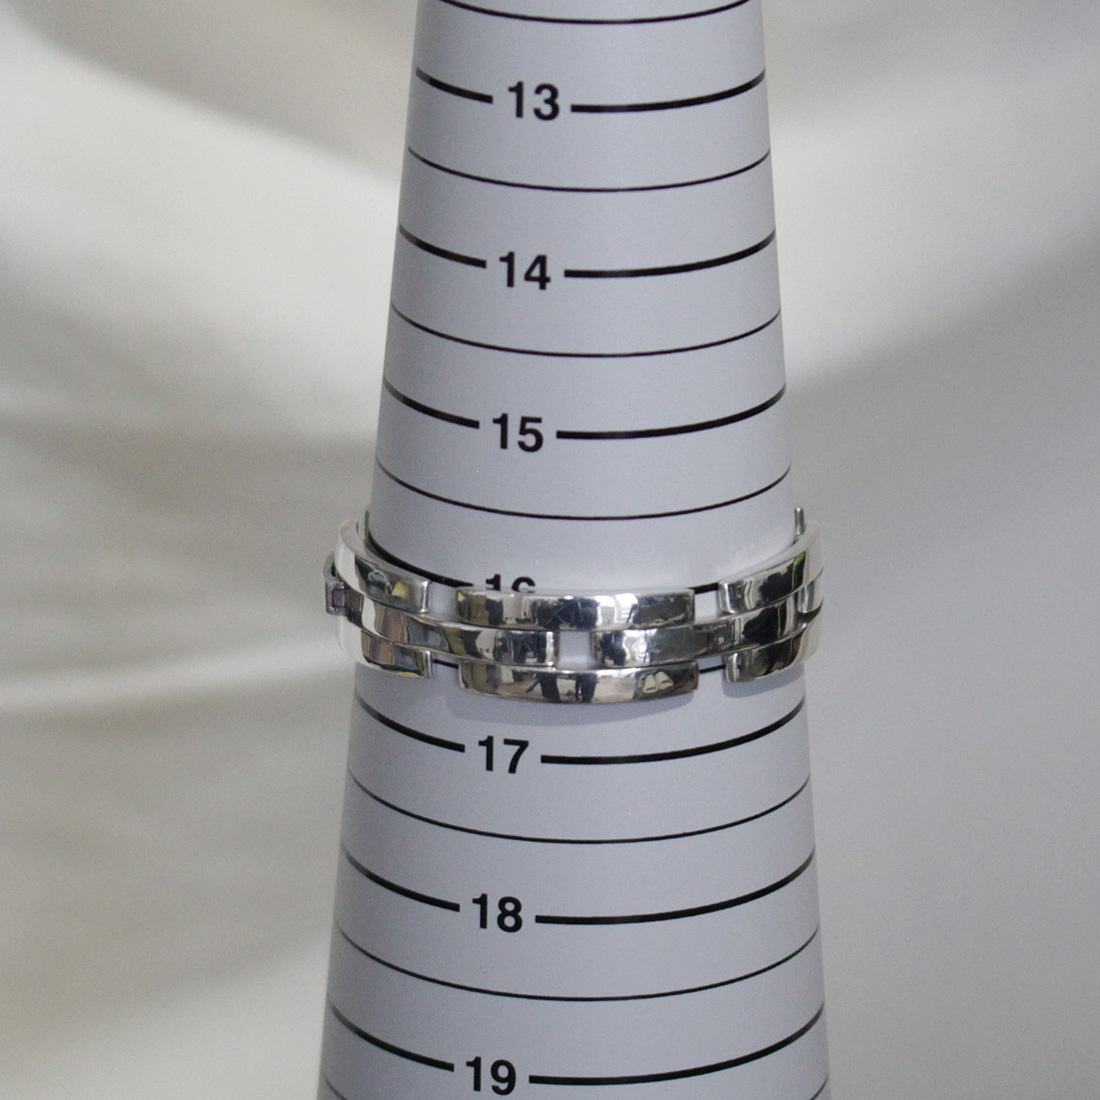  Gucci GUCCI bracele SV925 16cm 13.5mm width 51g* bangle man and woman use new goods finish settled 3911A